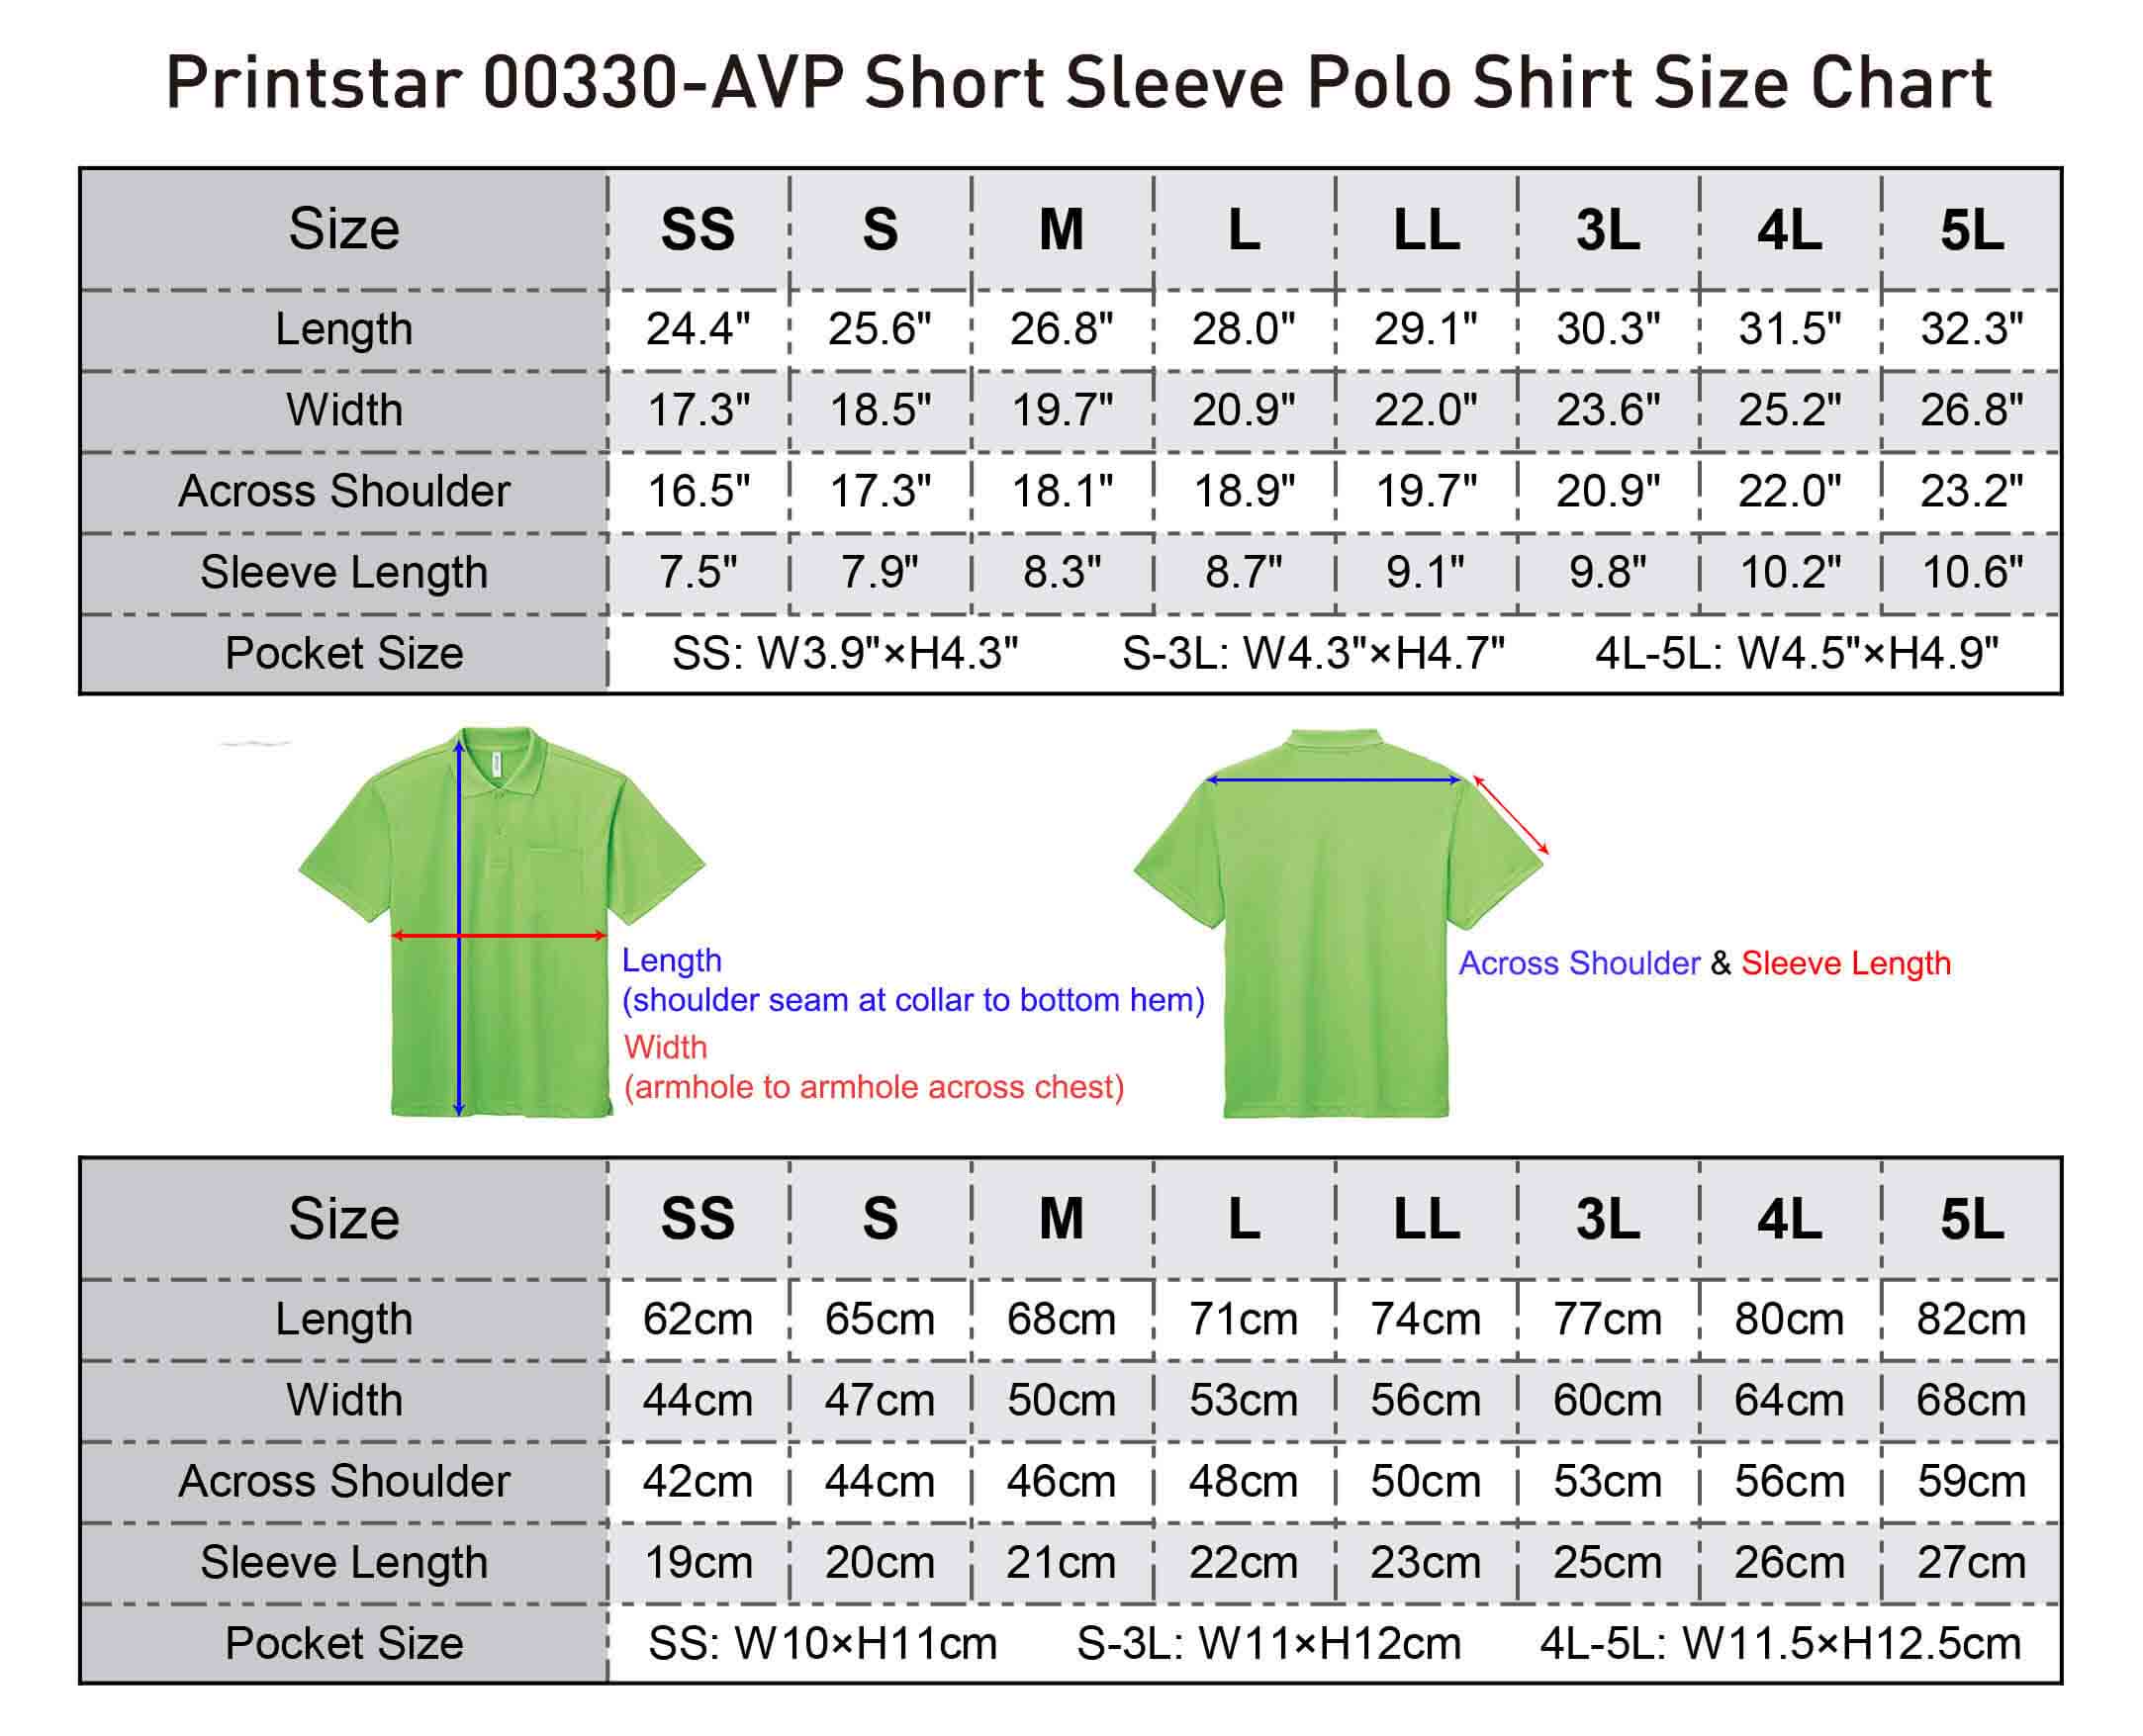 Printstar-00330-AVP-Short-Sleeve-Polo-Shirt-Size-Chart